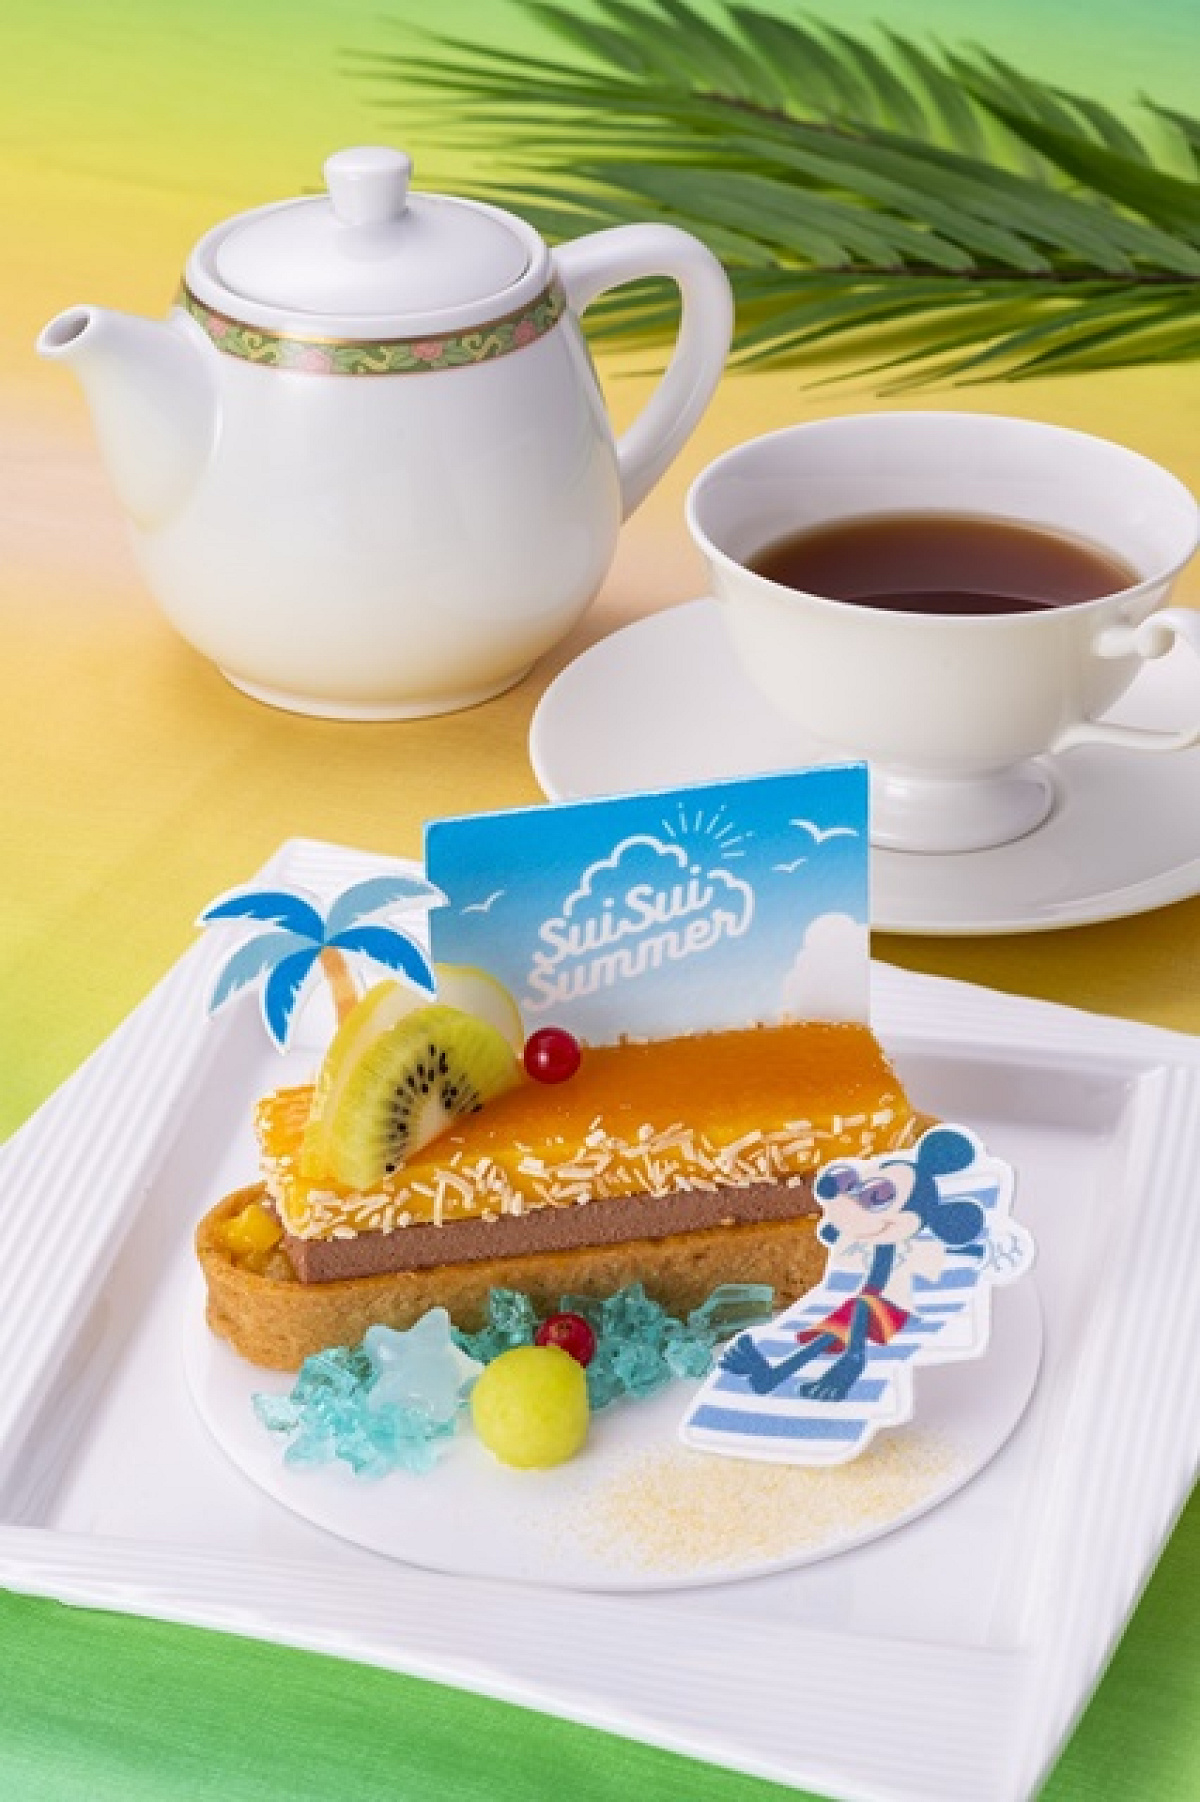 “SuiSui Summer”ケーキセット